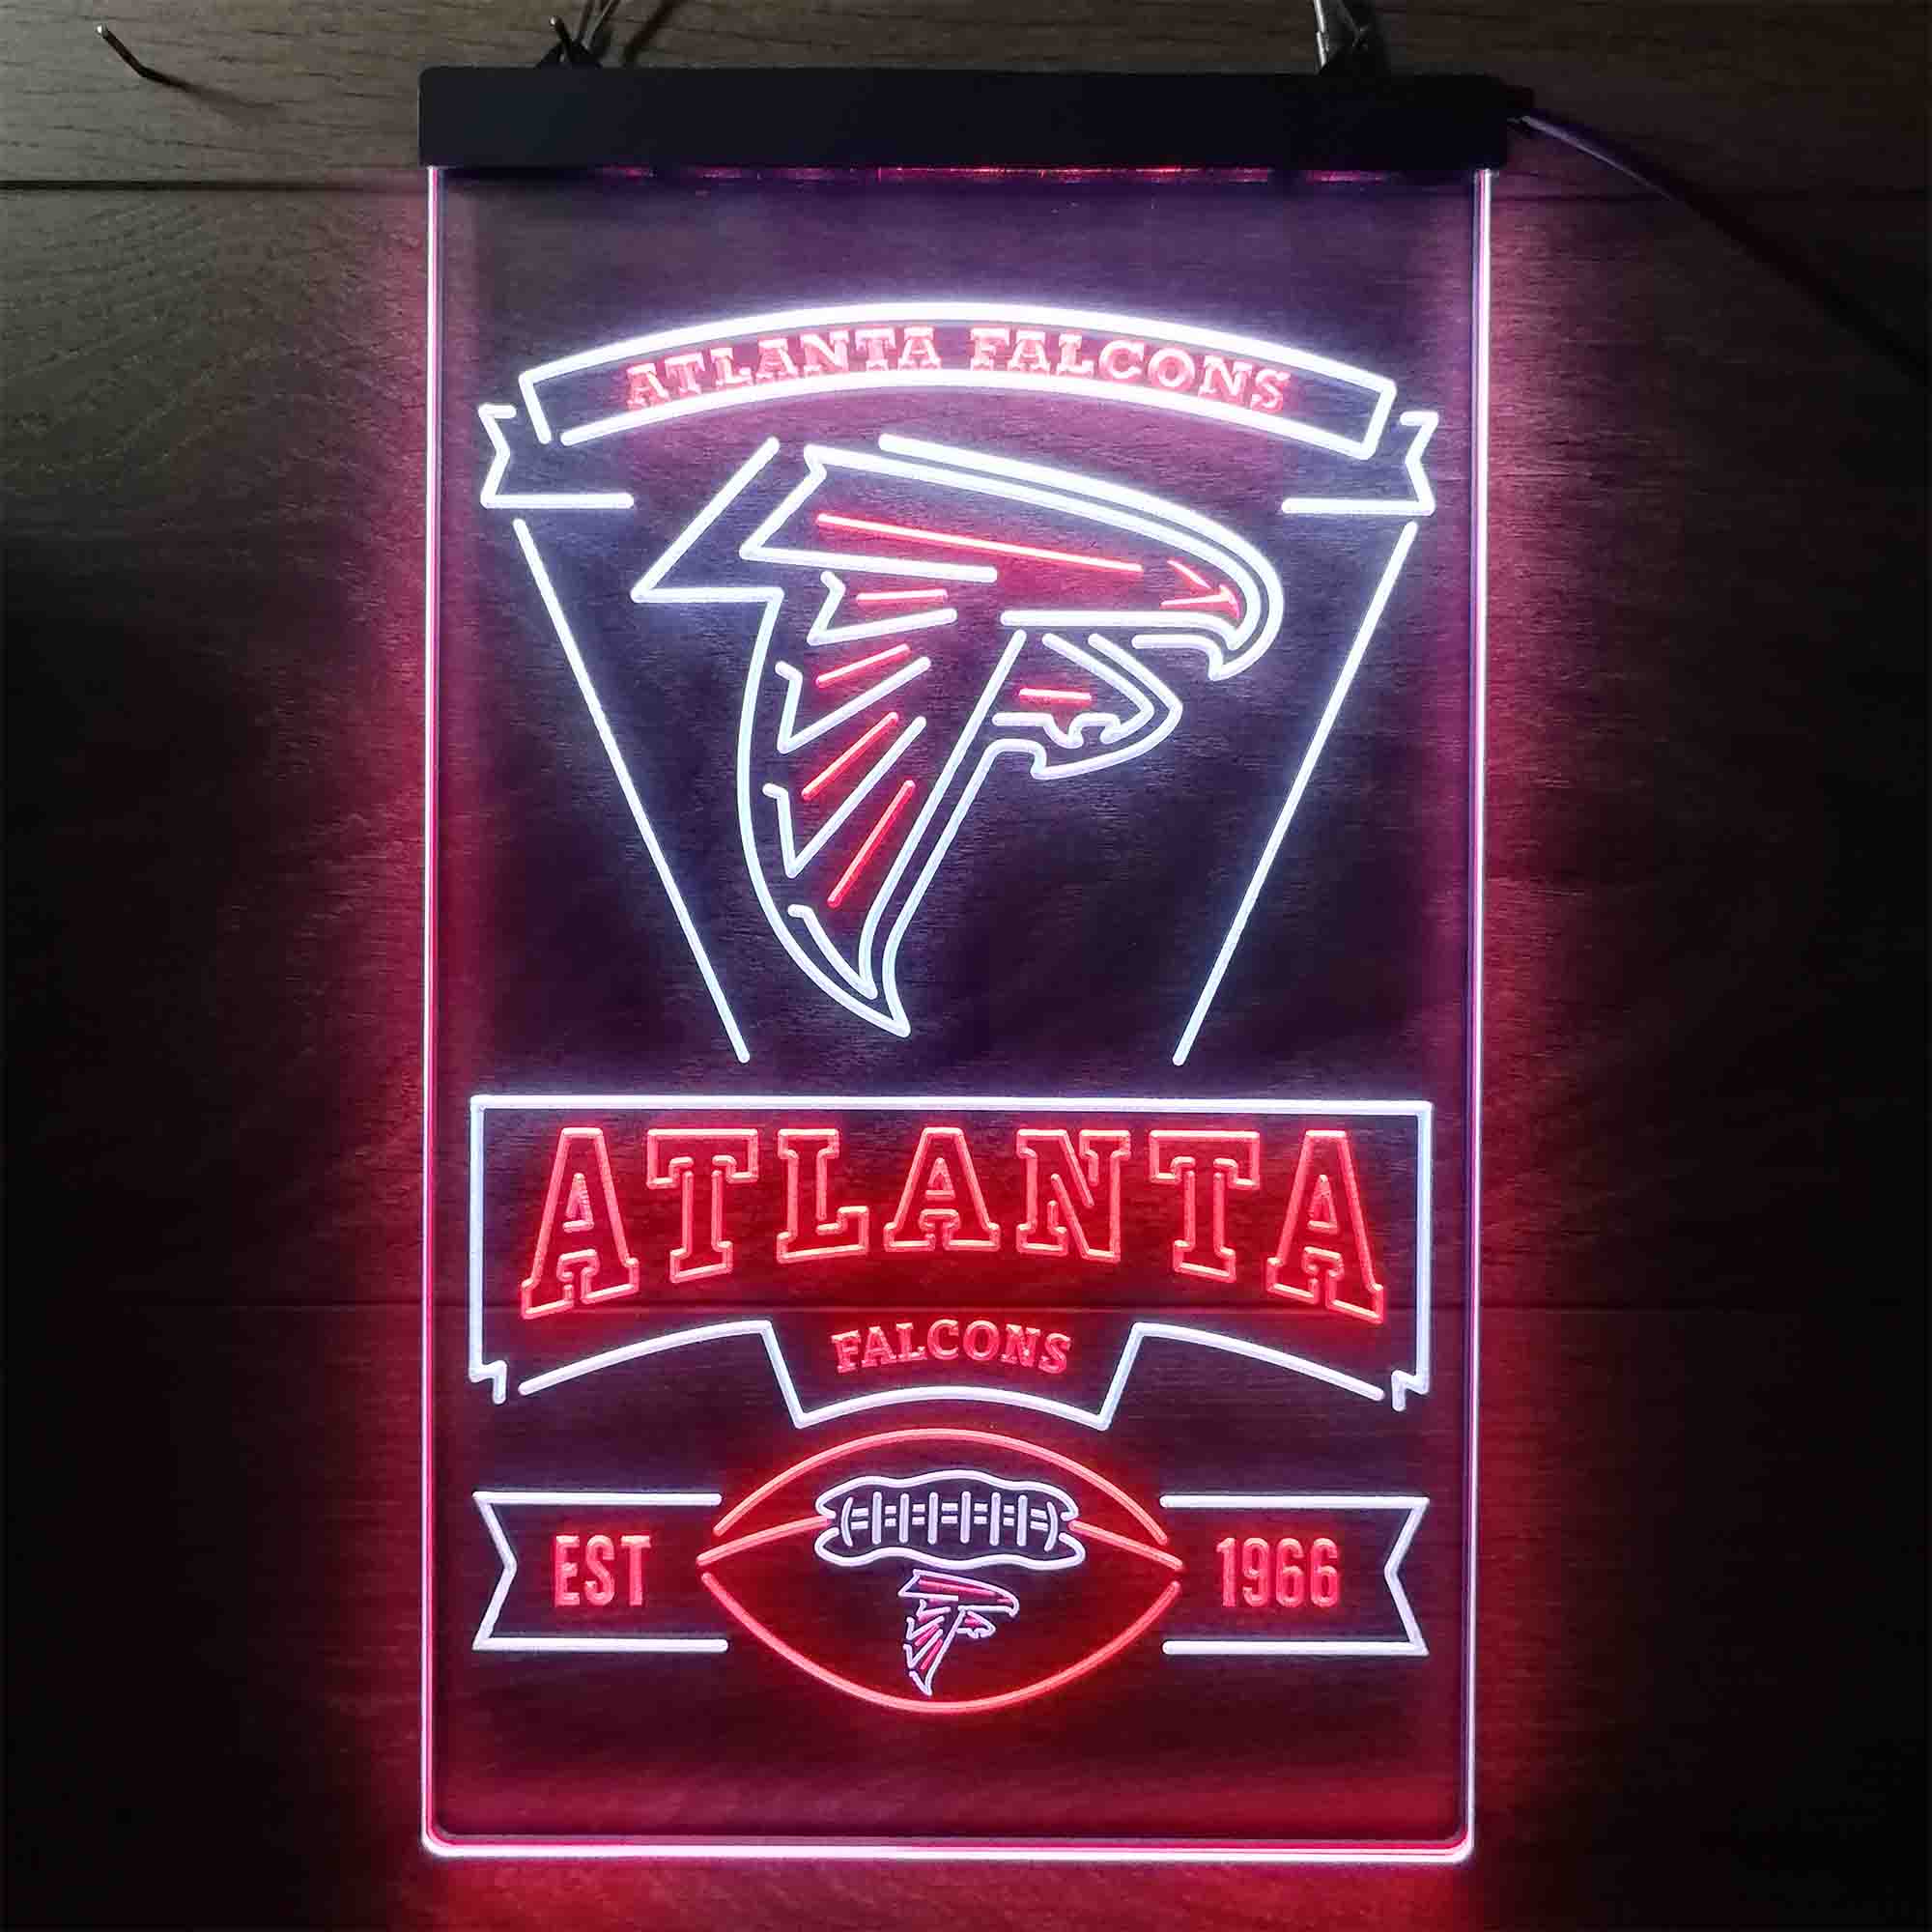 Atlanta Falcons Est. 1966 Neon-Like LED Sign